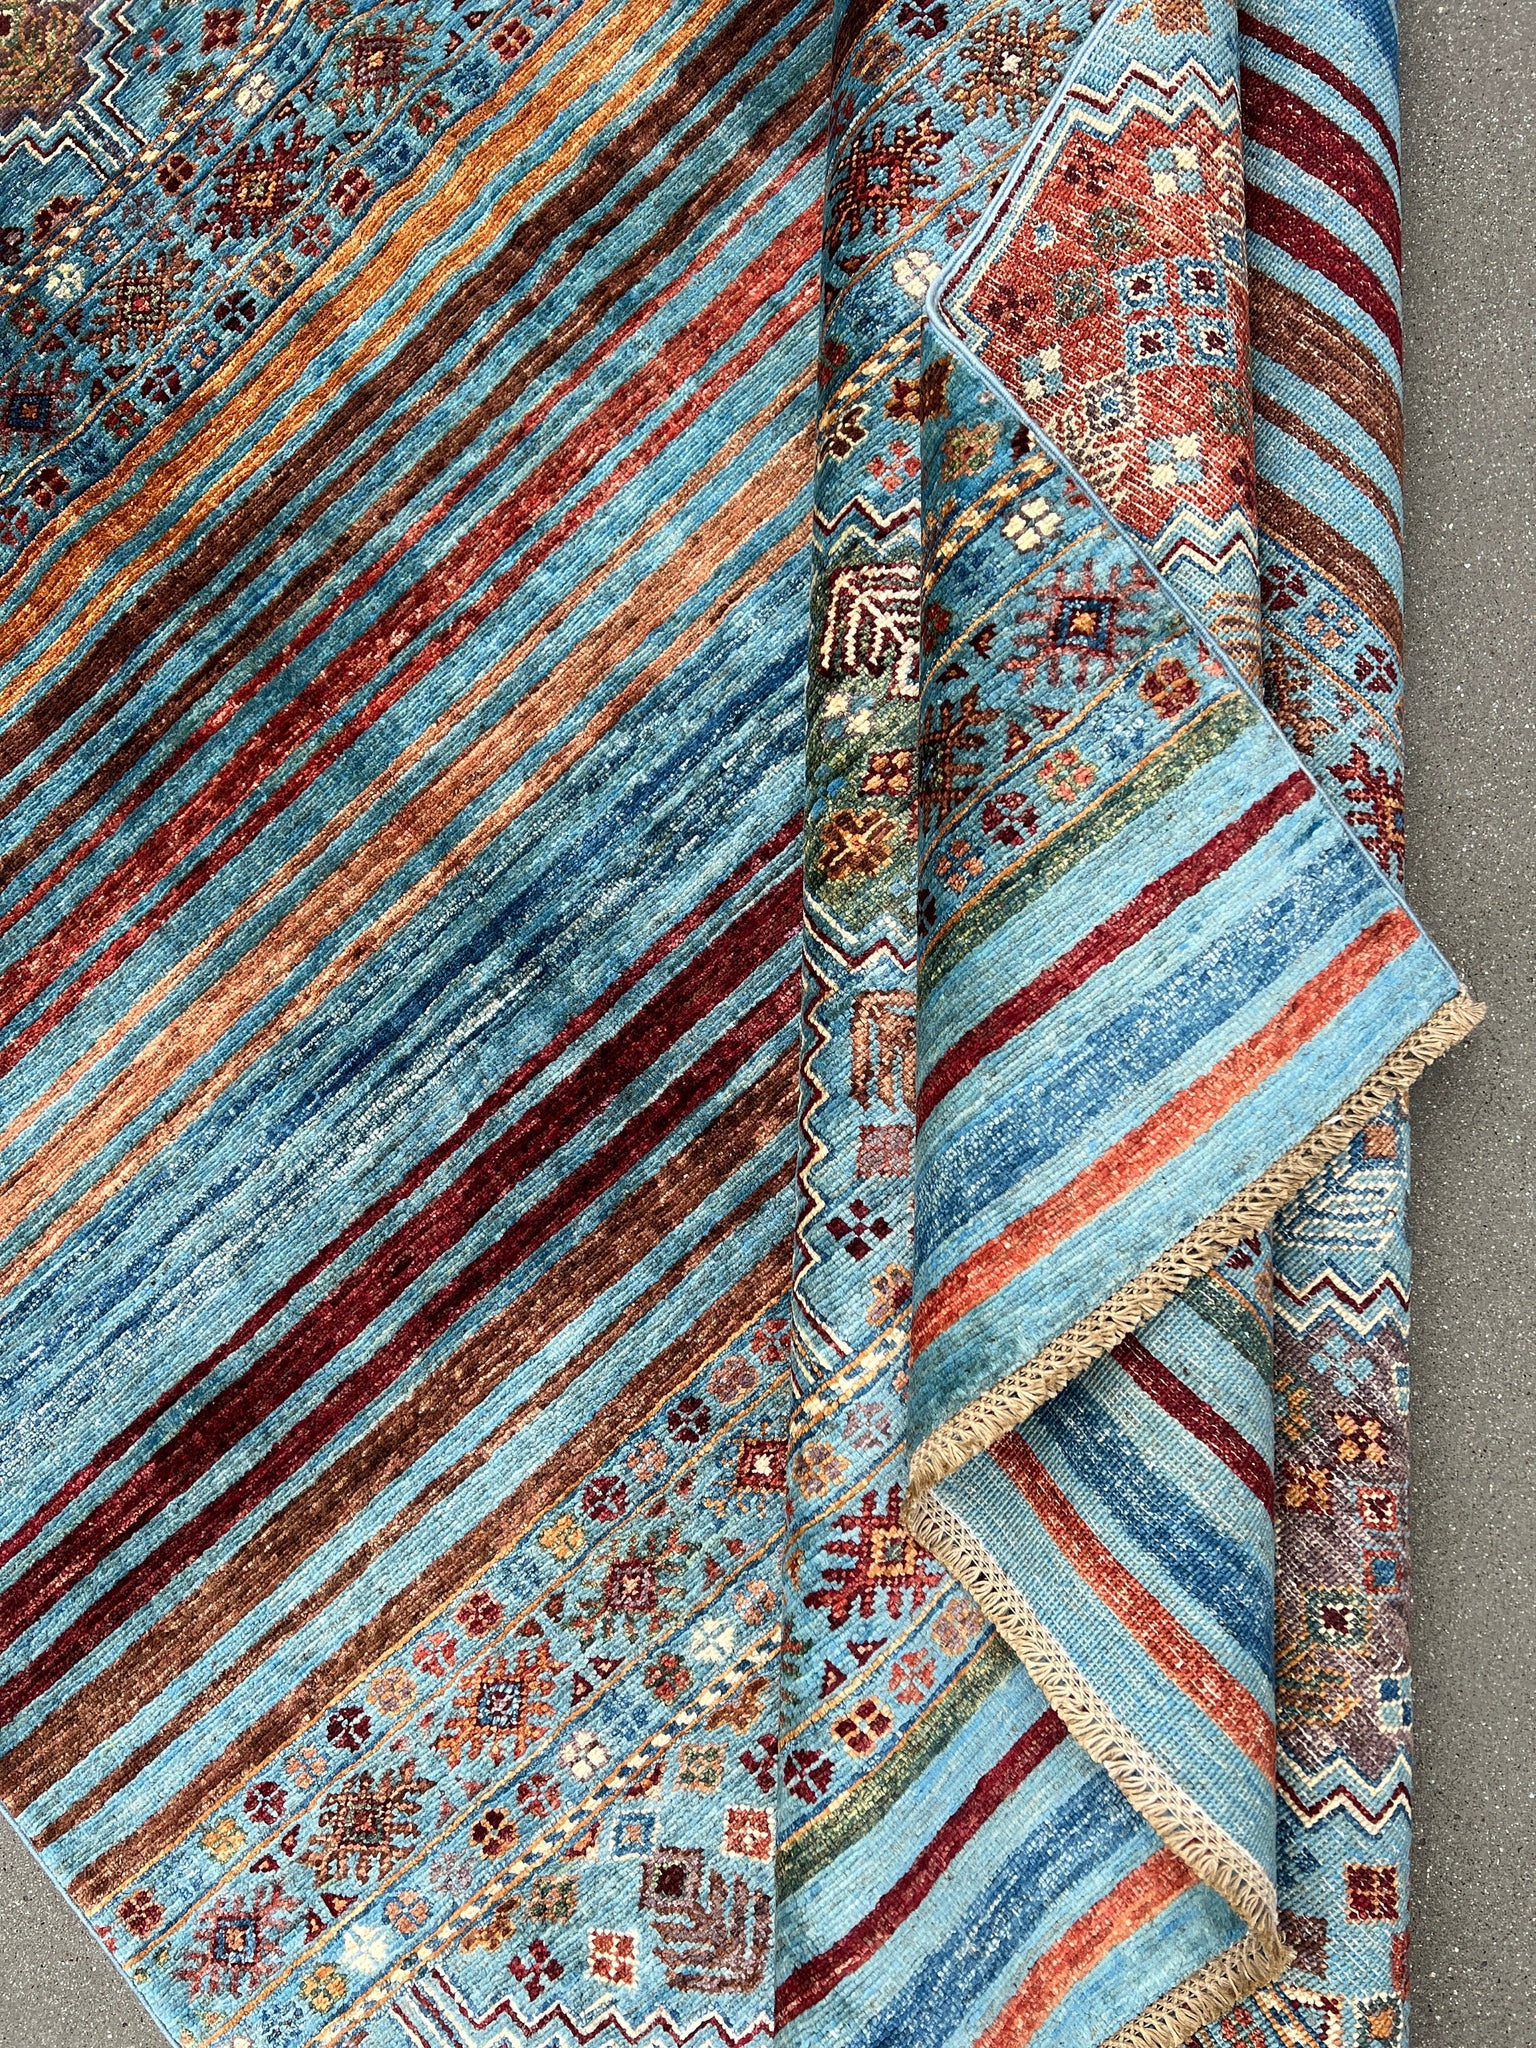 6x8 (180x245) Handmade Afghan Rug | Denim Blue Burnt Orange Brown Brick Red Cream Beige Ivory Green | Heriz Serapi Boho Turkish Floral Wool